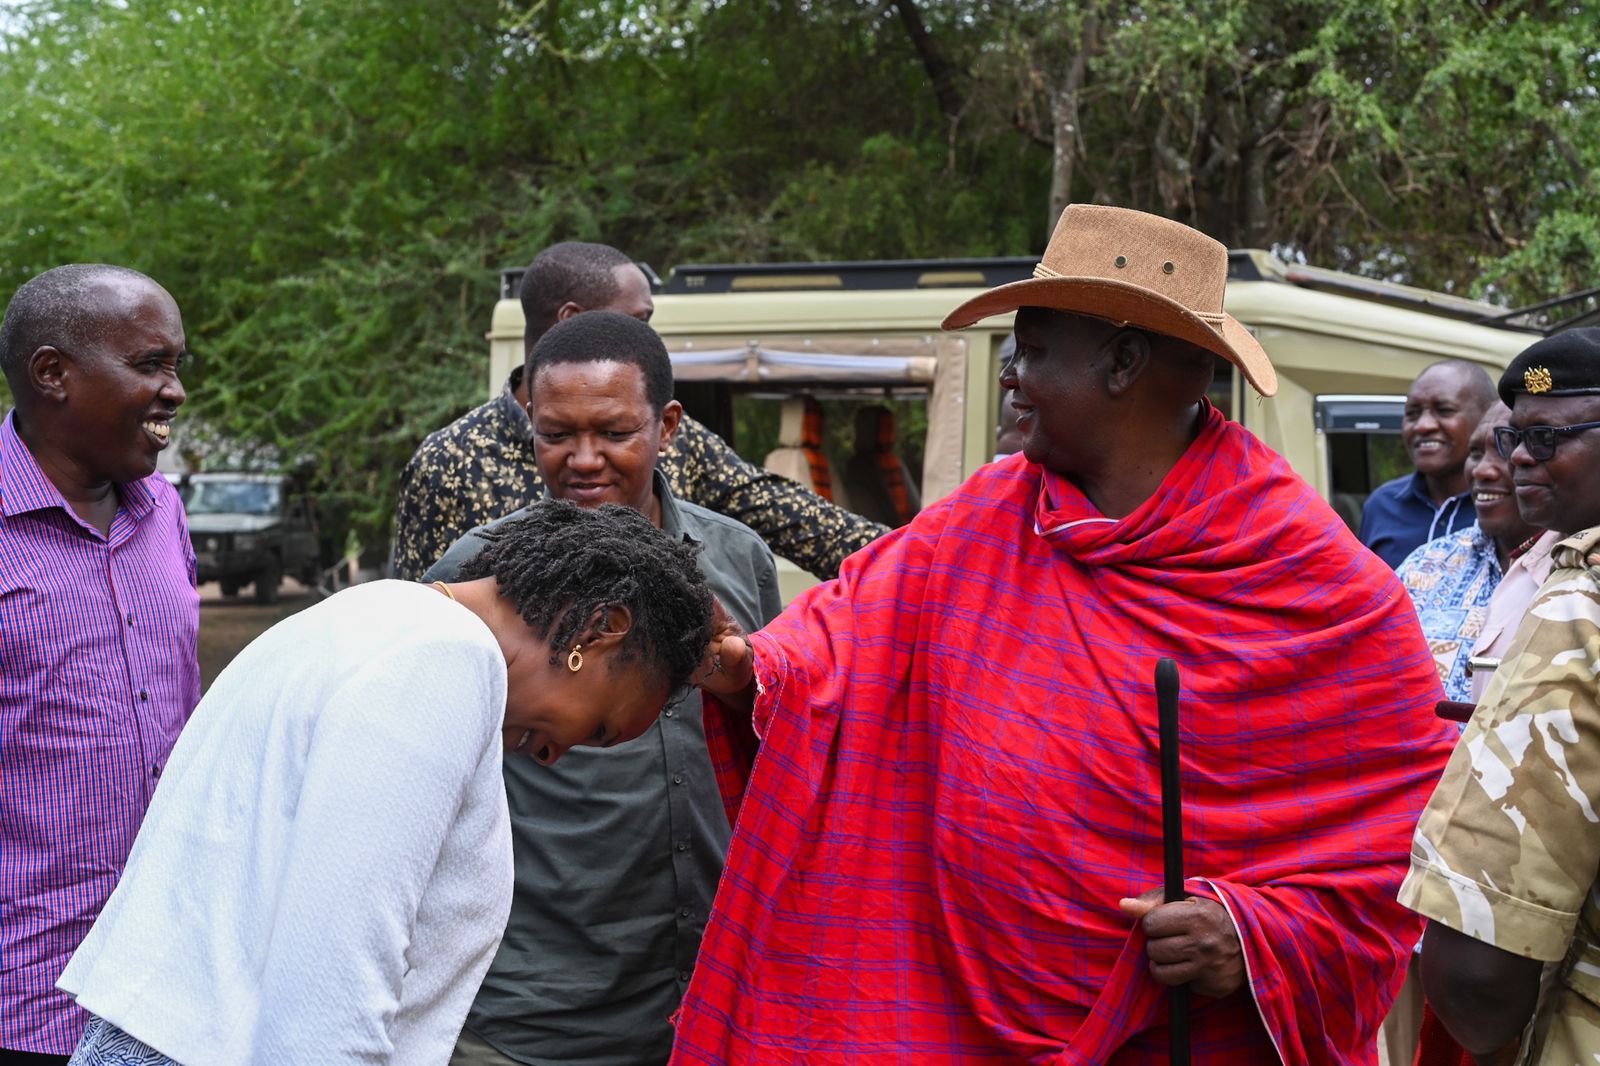 Principal Secretary Wildlife,Ms Silvia Museiya, displaying respect while being greeted by a Maasai elder.